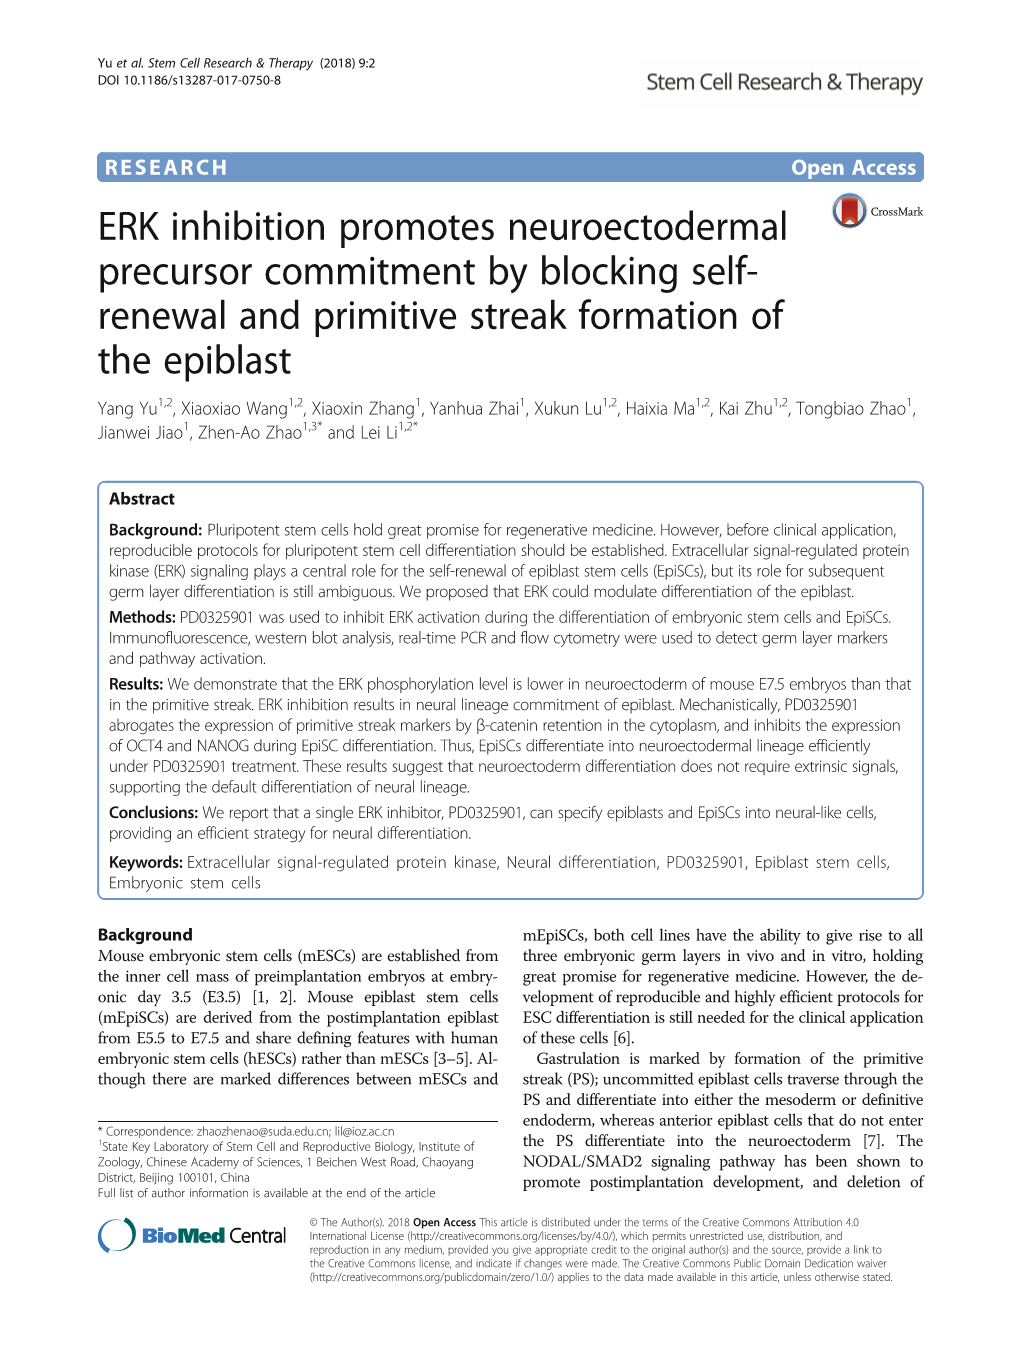 ERK Inhibition Promotes Neuroectodermal Precursor